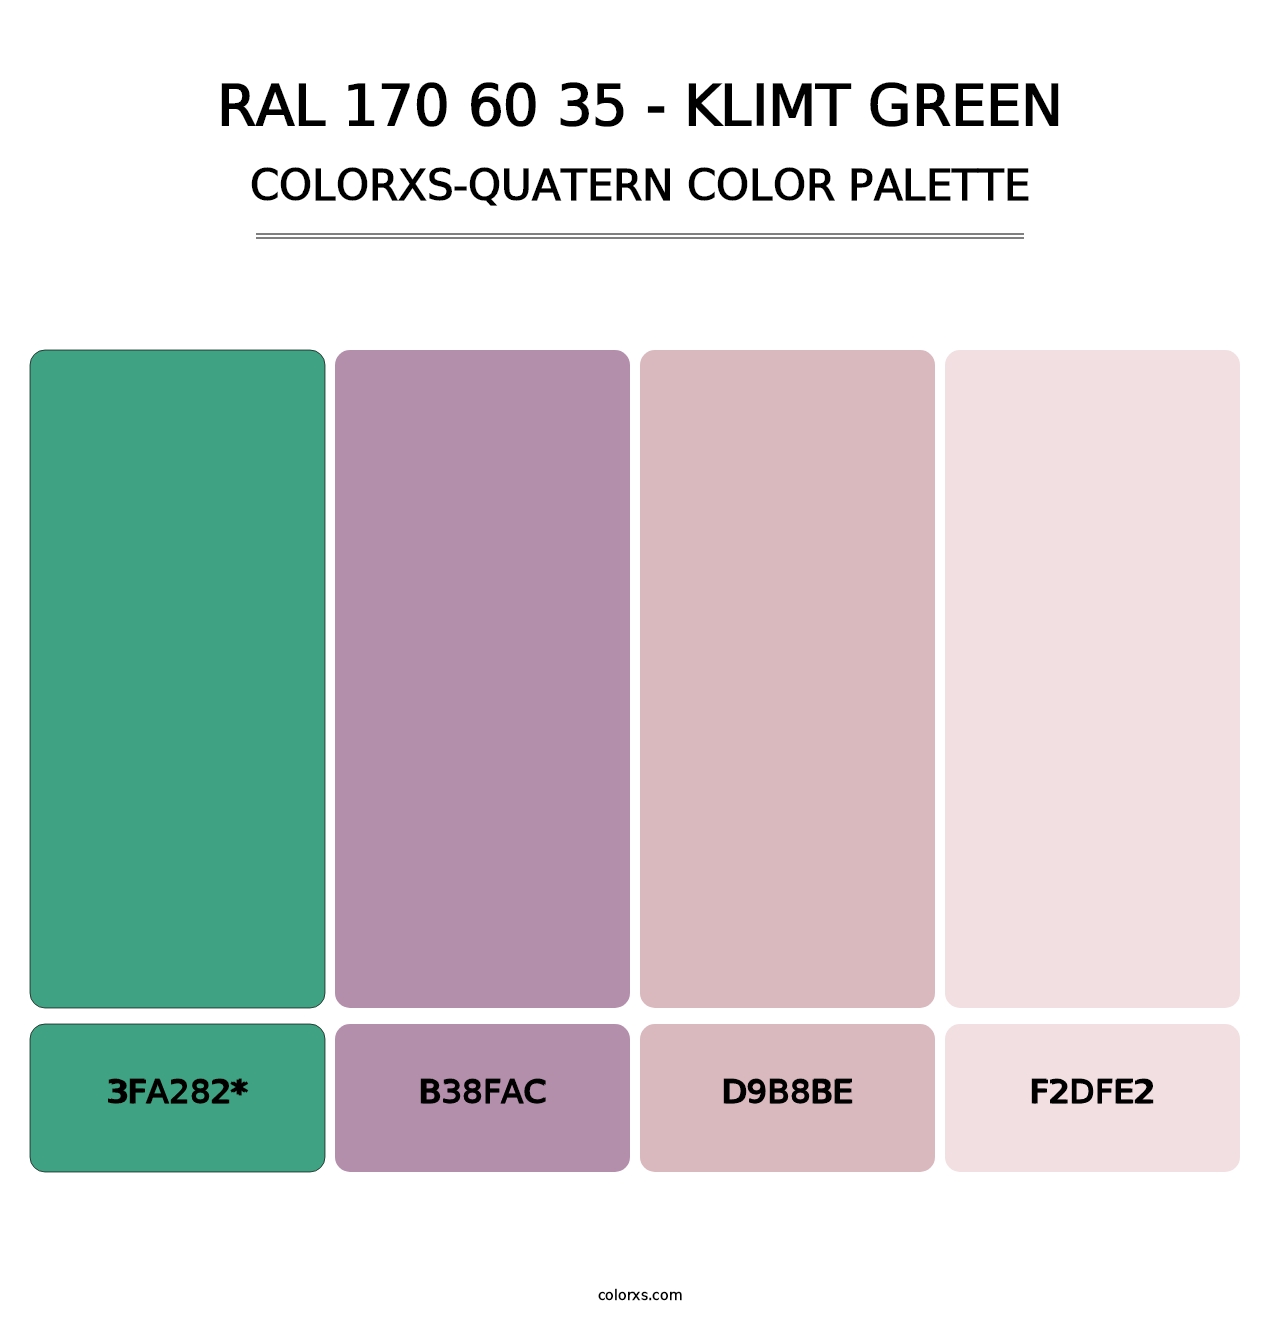 RAL 170 60 35 - Klimt Green - Colorxs Quatern Palette